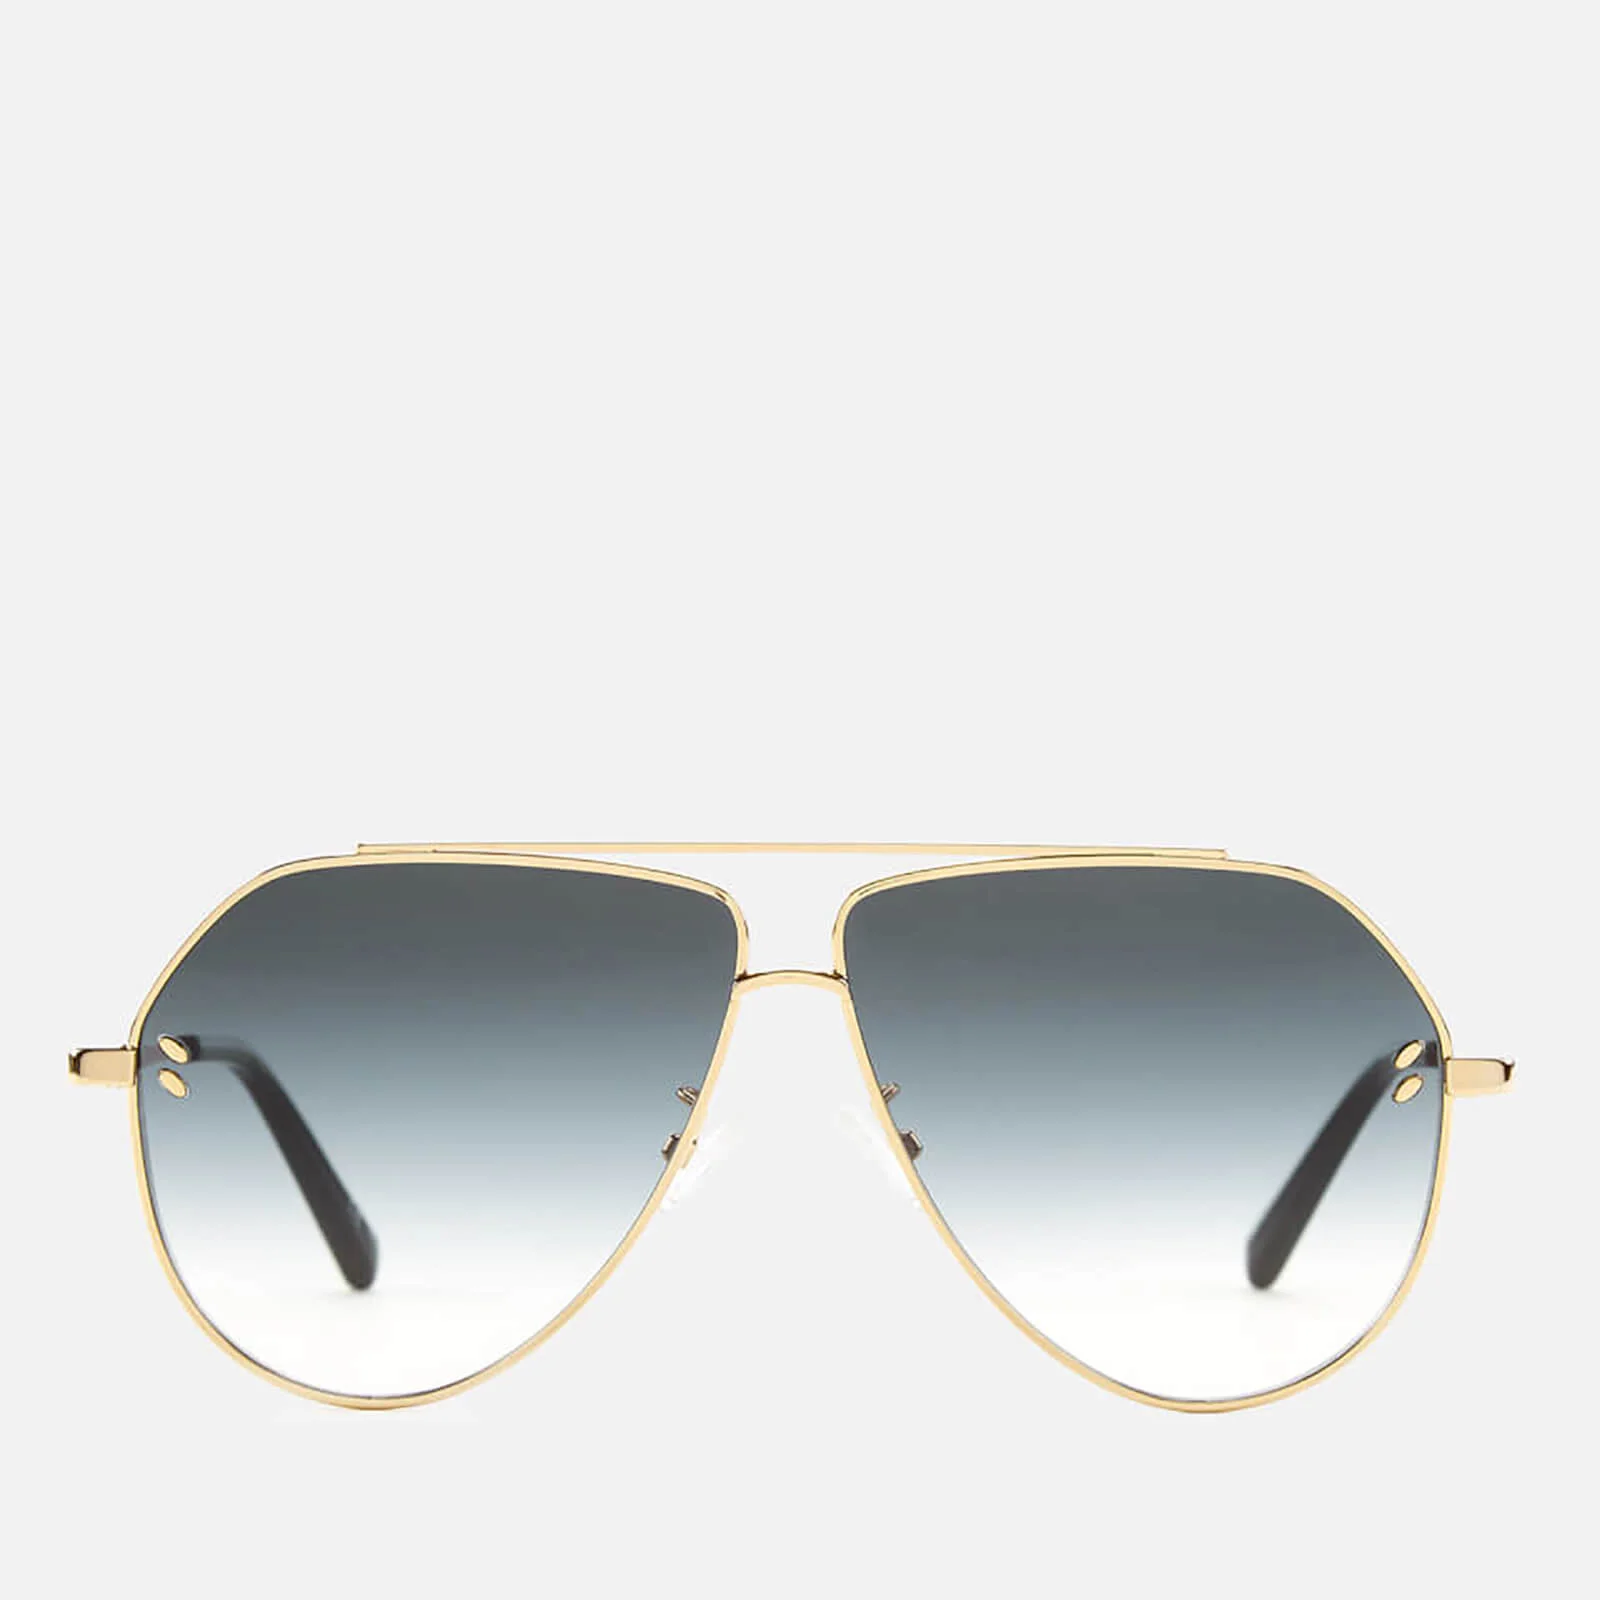 Stella McCartney Women's Aviator Sunglasses - Gold/Grey Image 1